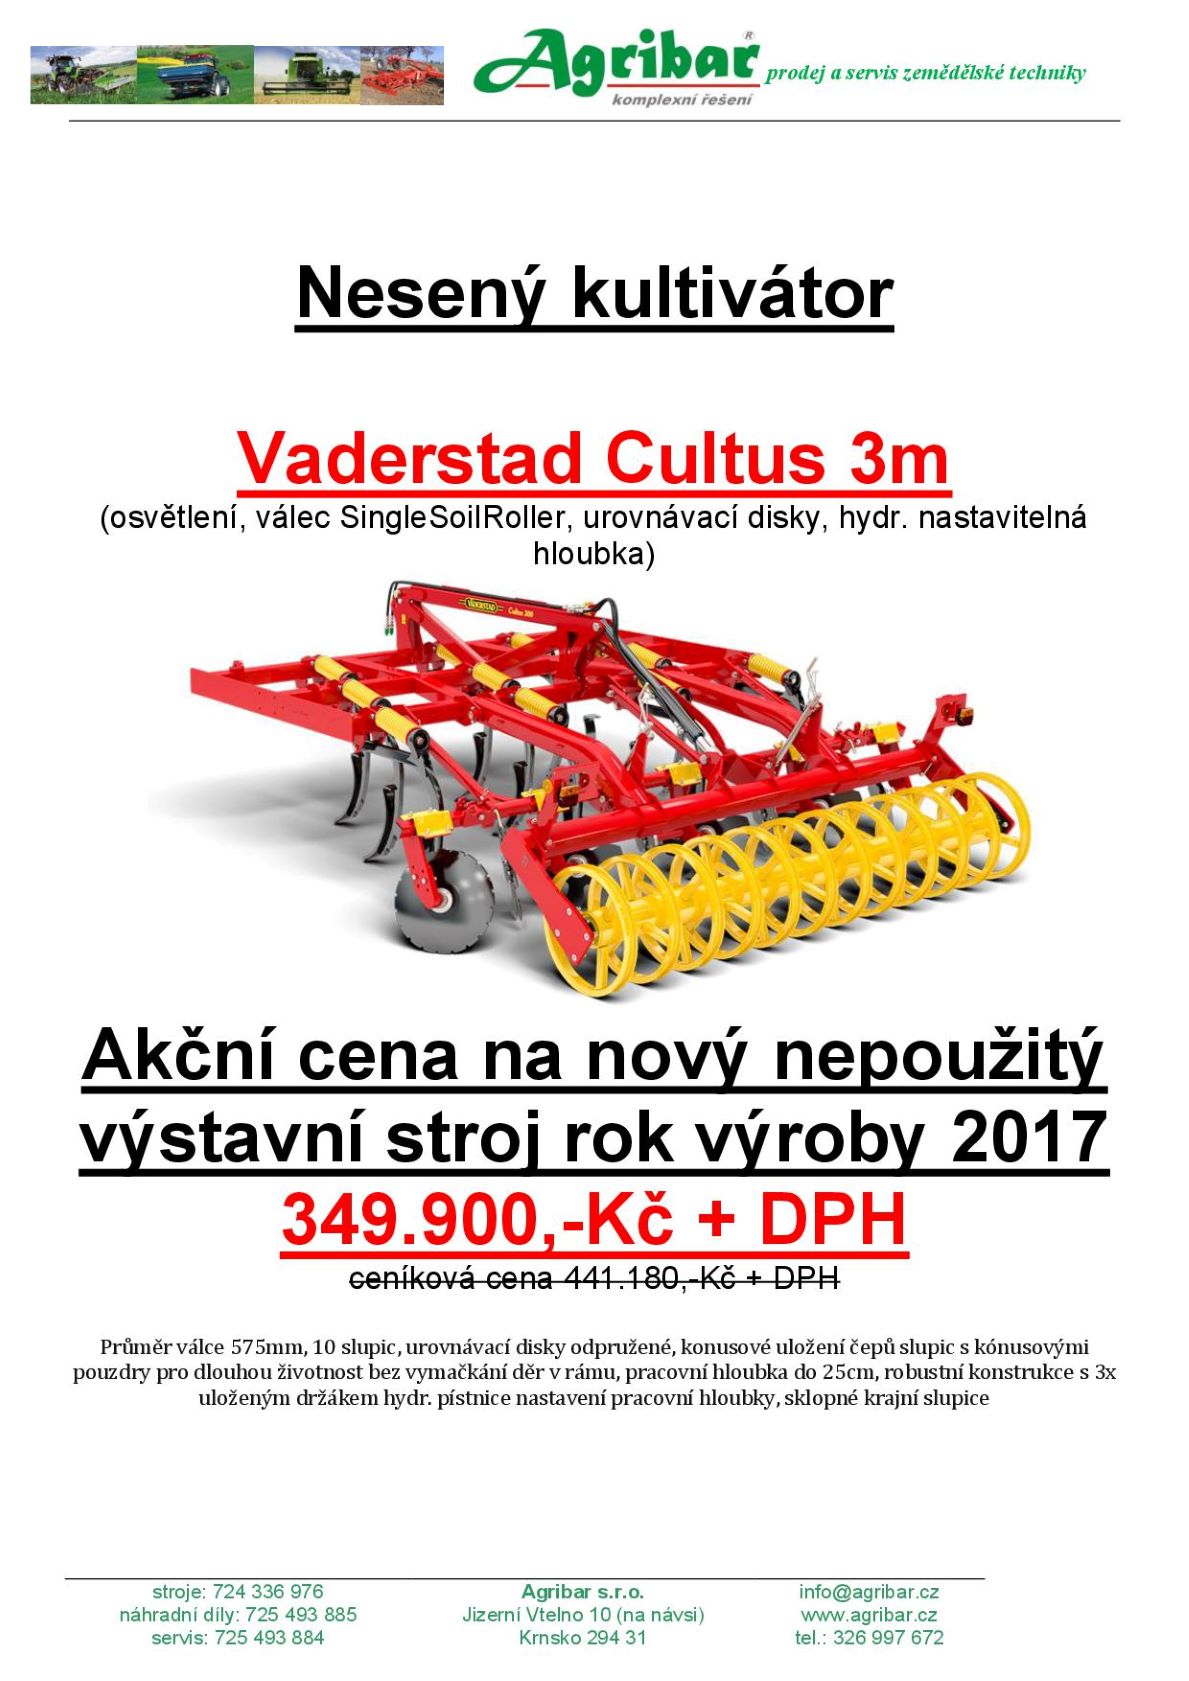 C_Users_ND Agribar_Desktop_Nová složka_Nabídka Vaderstad Cultus 300 Agribar 2019 - kopie